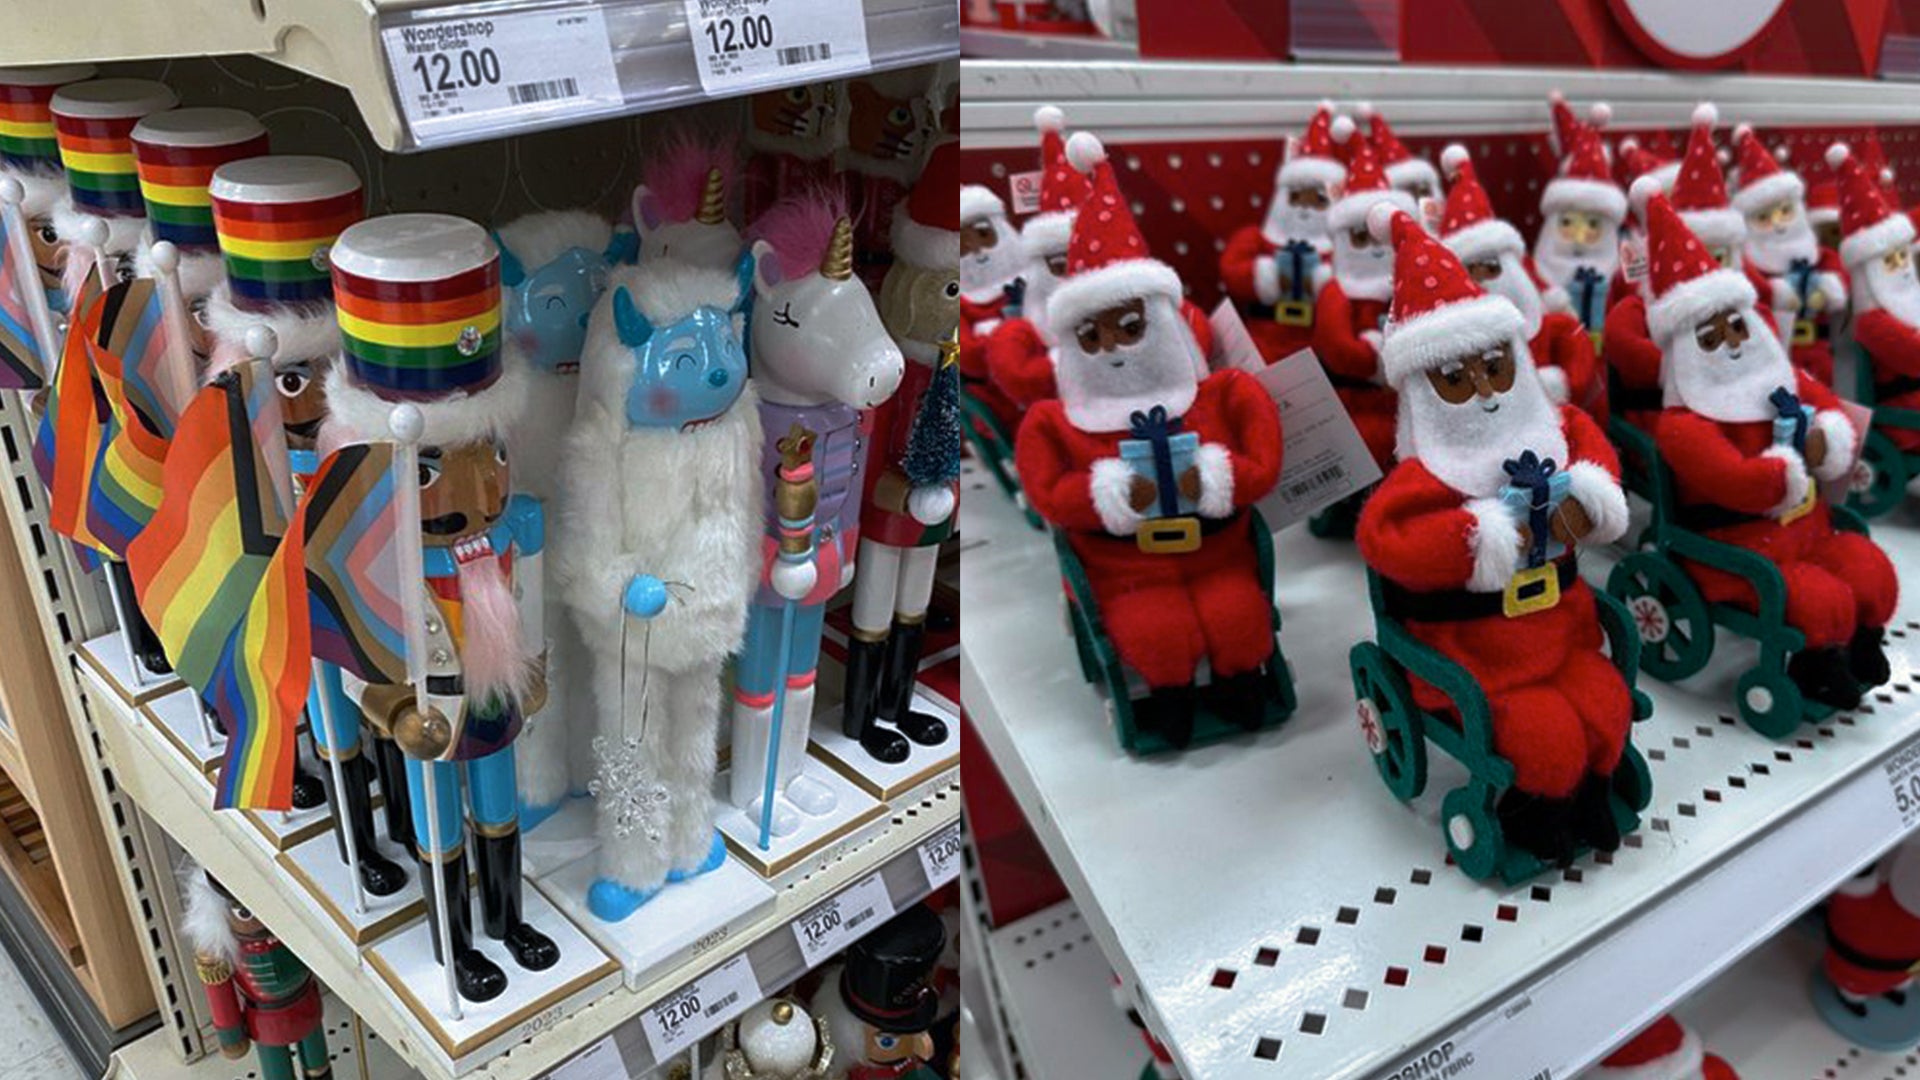 Target Pushes LGBT Agenda at Christmas, Sells Gay-Pride Santa & Nutcracker Figures